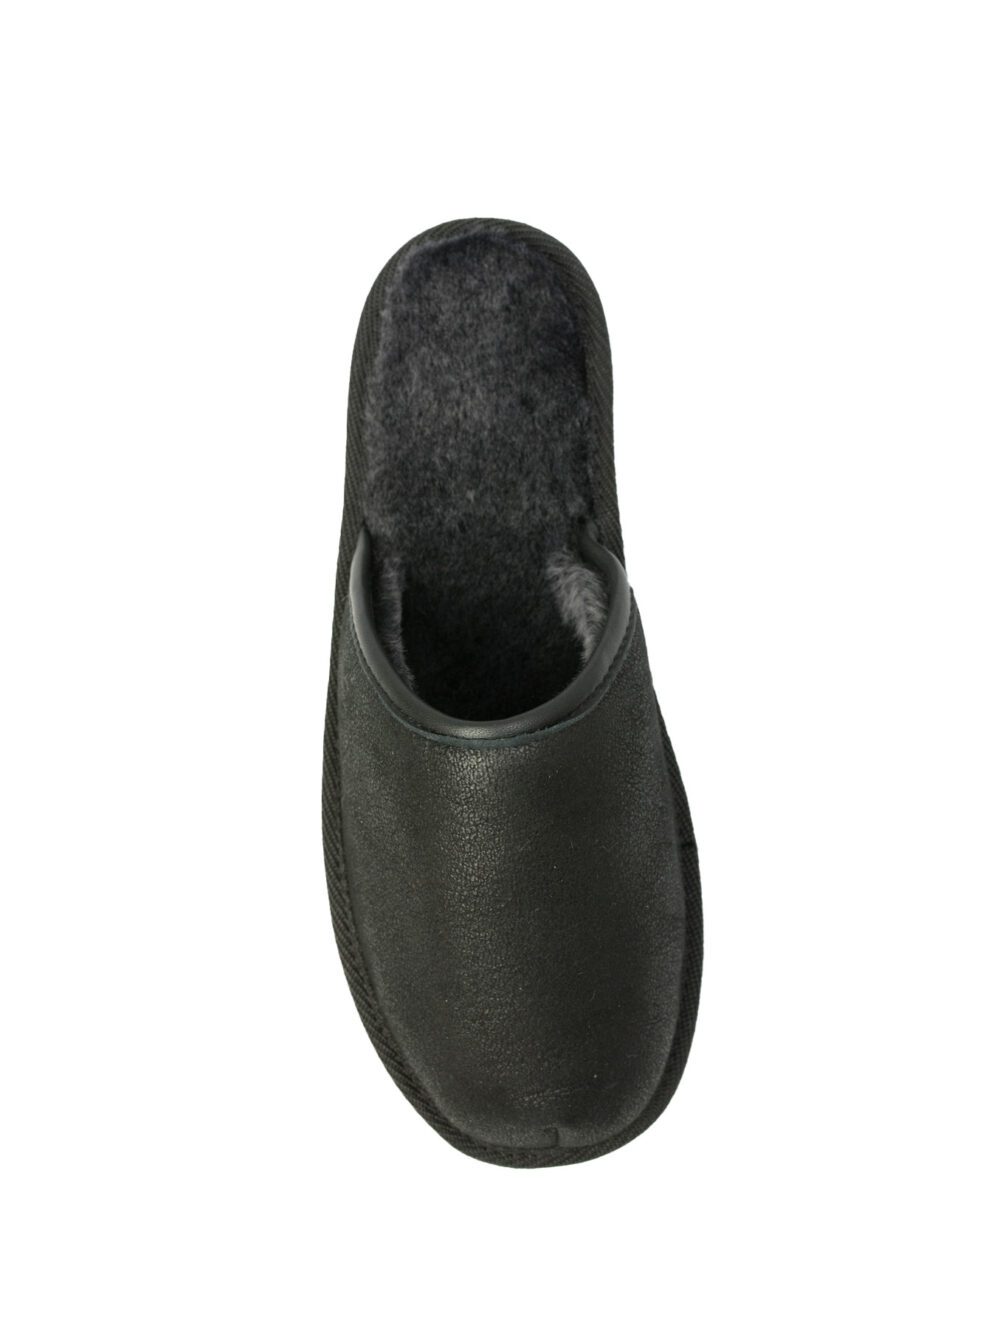 Men’s slippers Caldor Black Accessories Producent owczych skór dekoracyjnych | Tannery Sheepskin | KalSkór 5